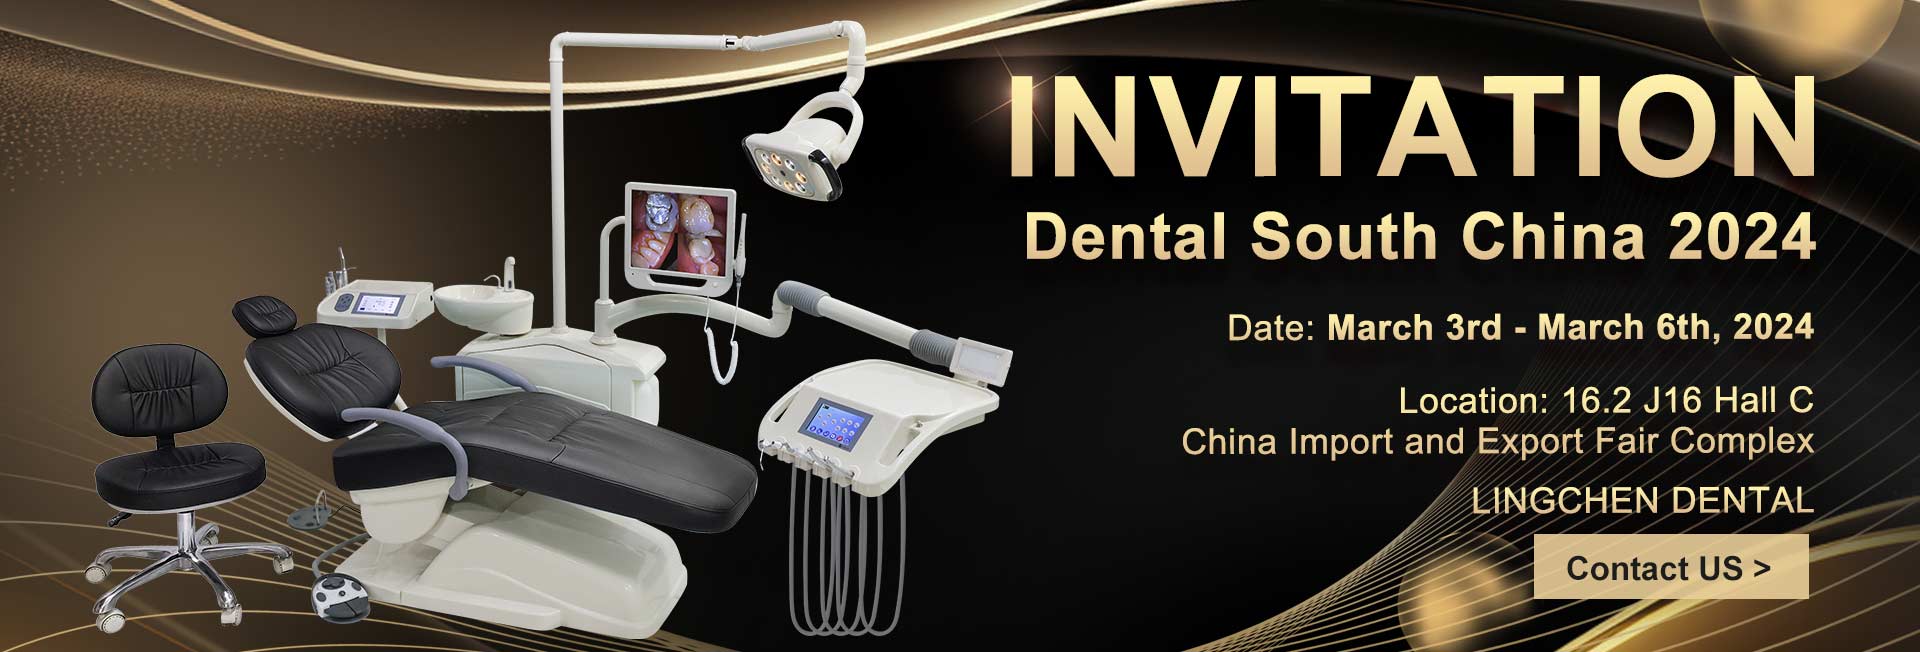 Invitació Dental South China 2024